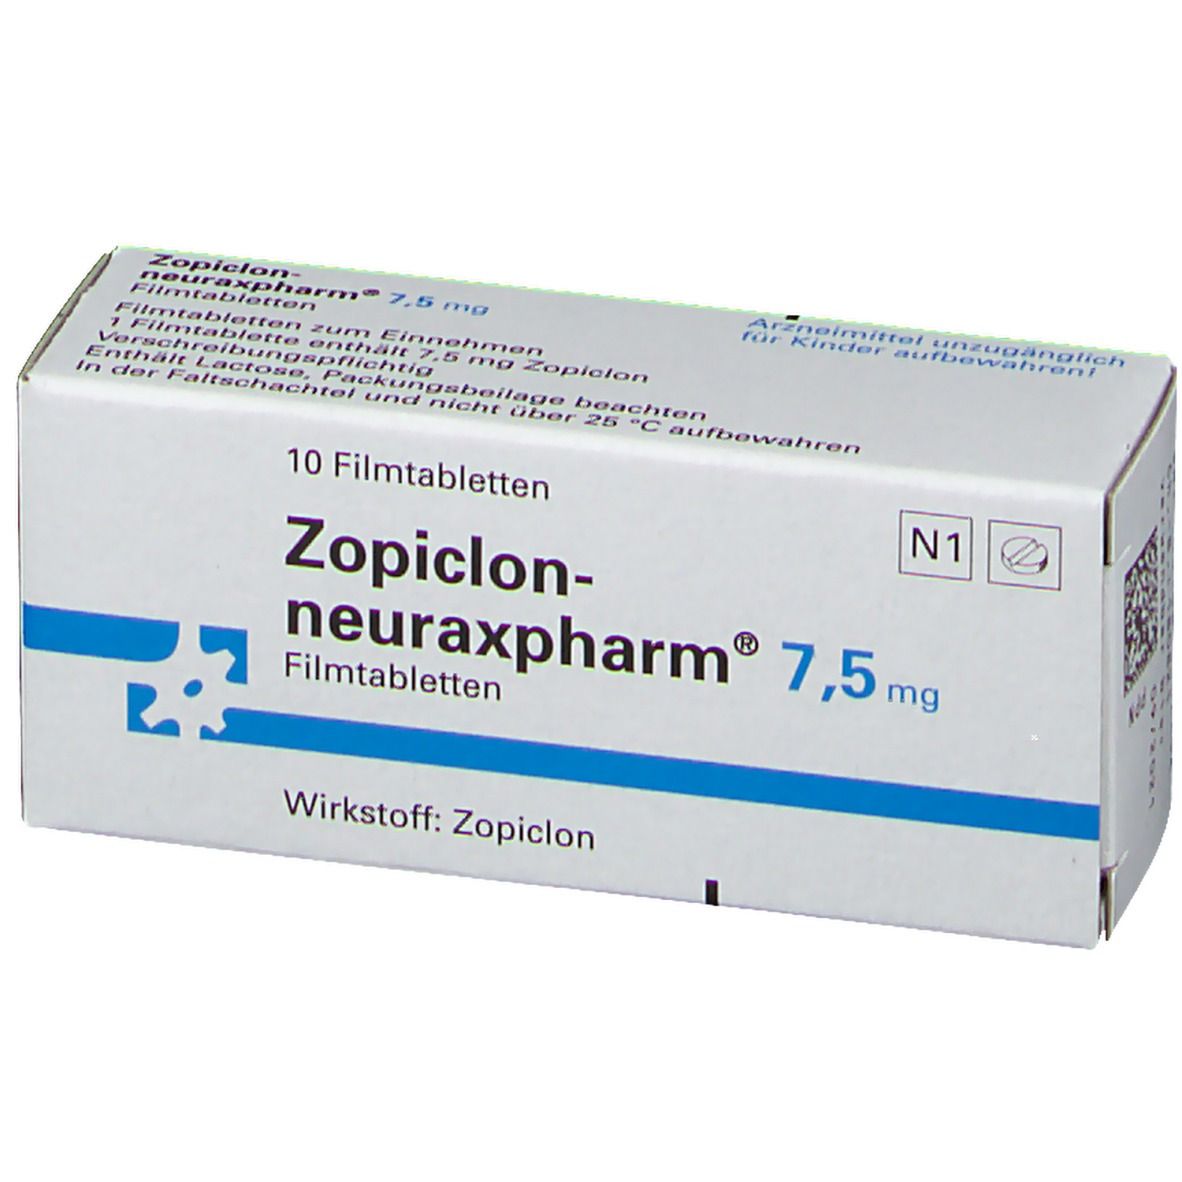 Zopiclon-neuraxpharm® 7,5 mg